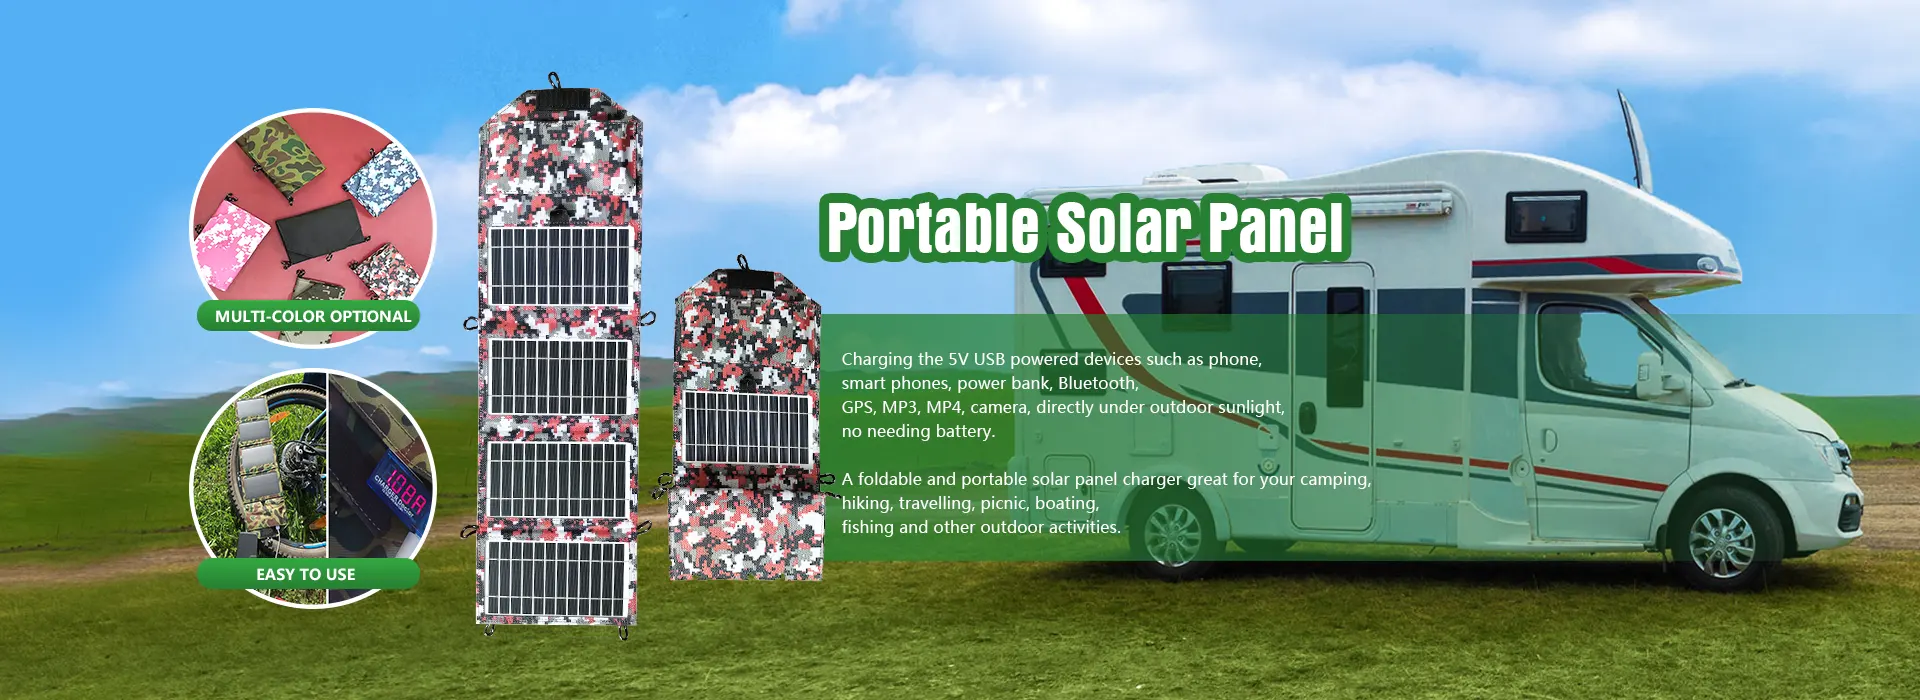 El panel solar portátil Fabricantes